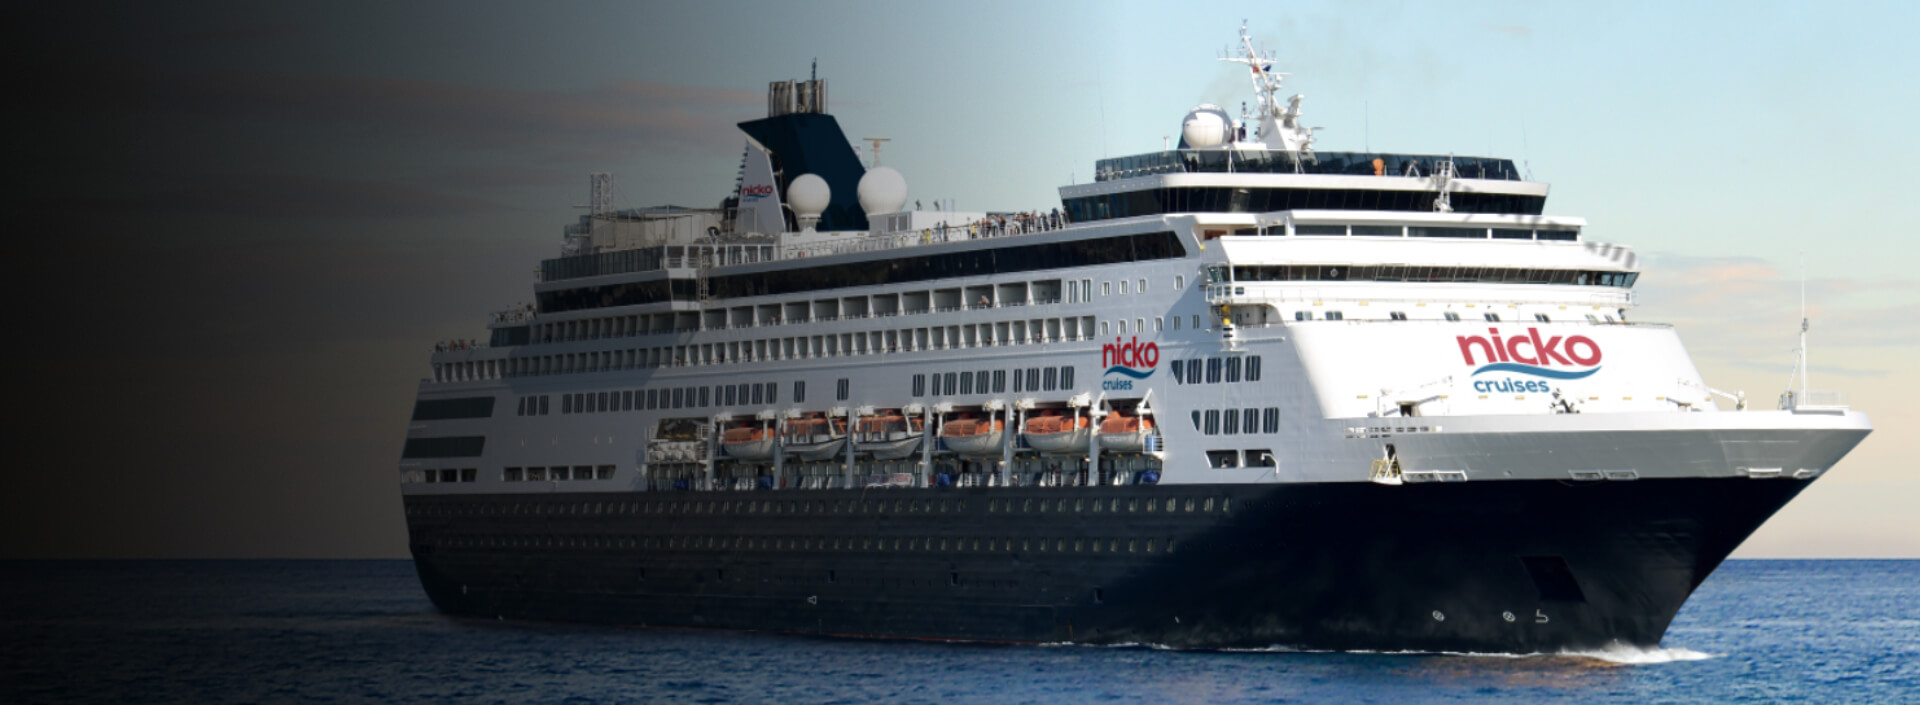 Mystic Cruises invests in <span class='text-highlight'>multimedia kiosks</span> for Vasco da Gama ship